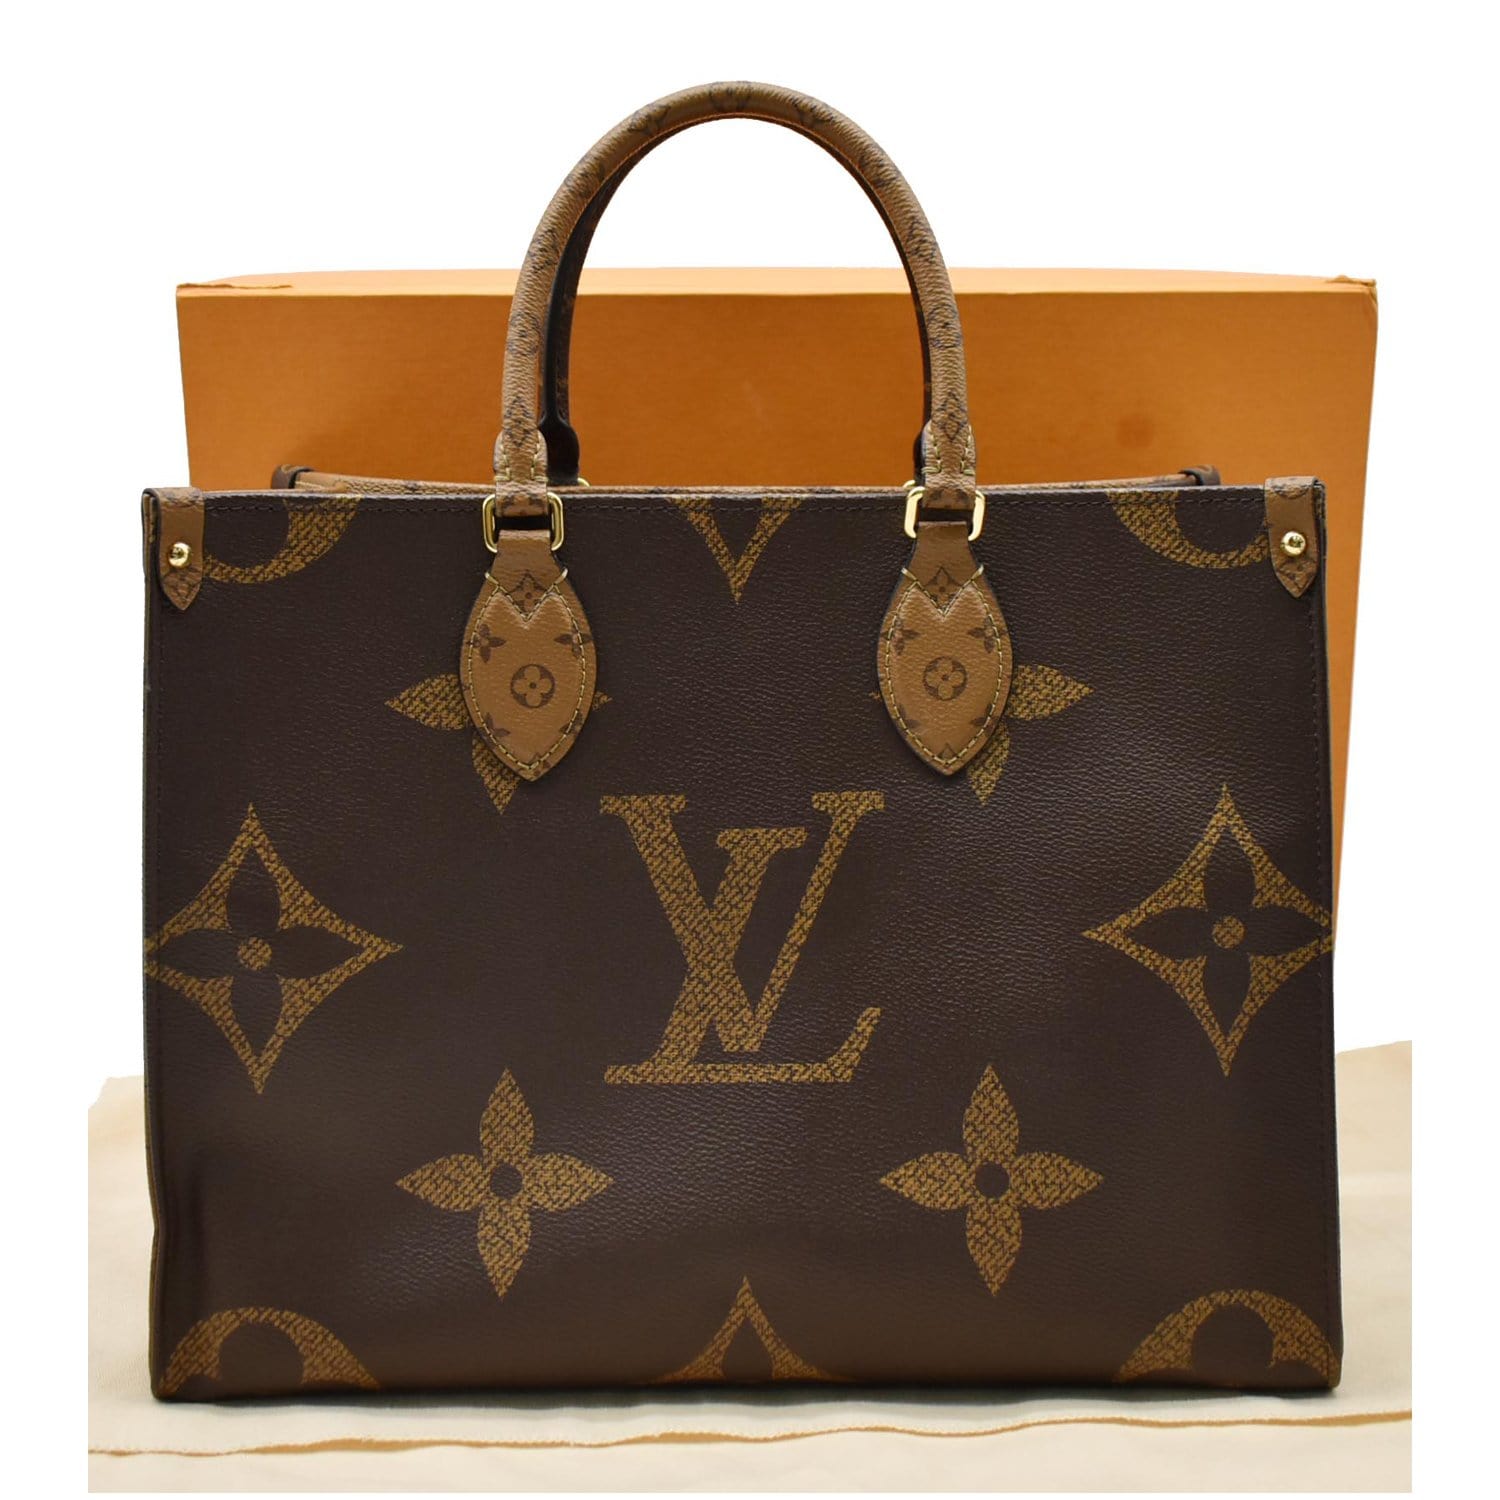 Where Did All The Louis Vuitton Monogram Canvas Go? - PurseBop